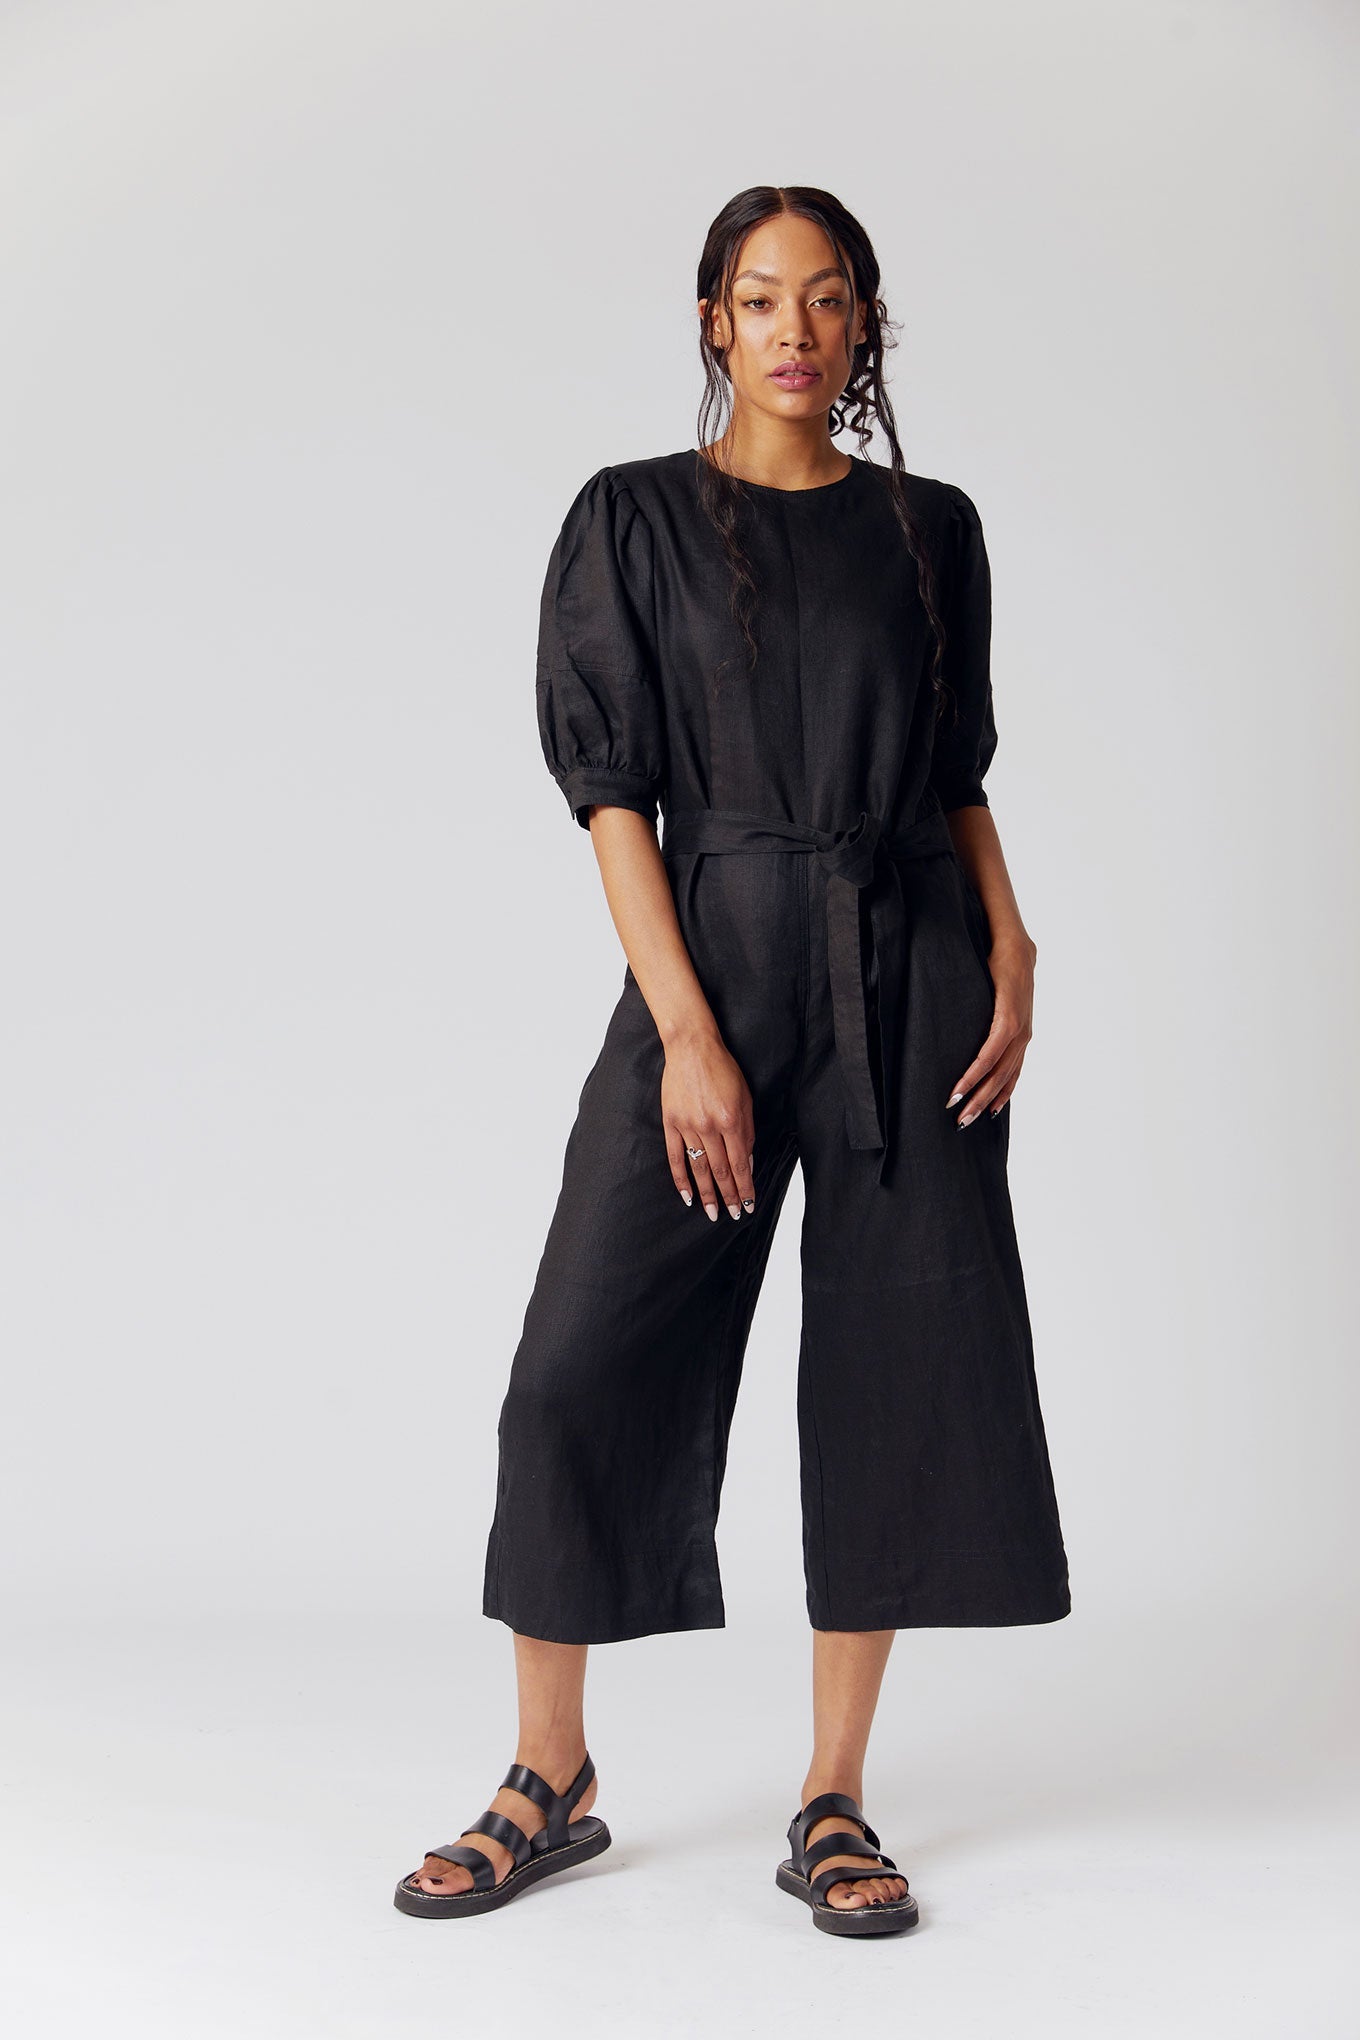 FAYE Organic Linen Jumpsuit Black, SIZE 4 / UK 14 / EUR 42